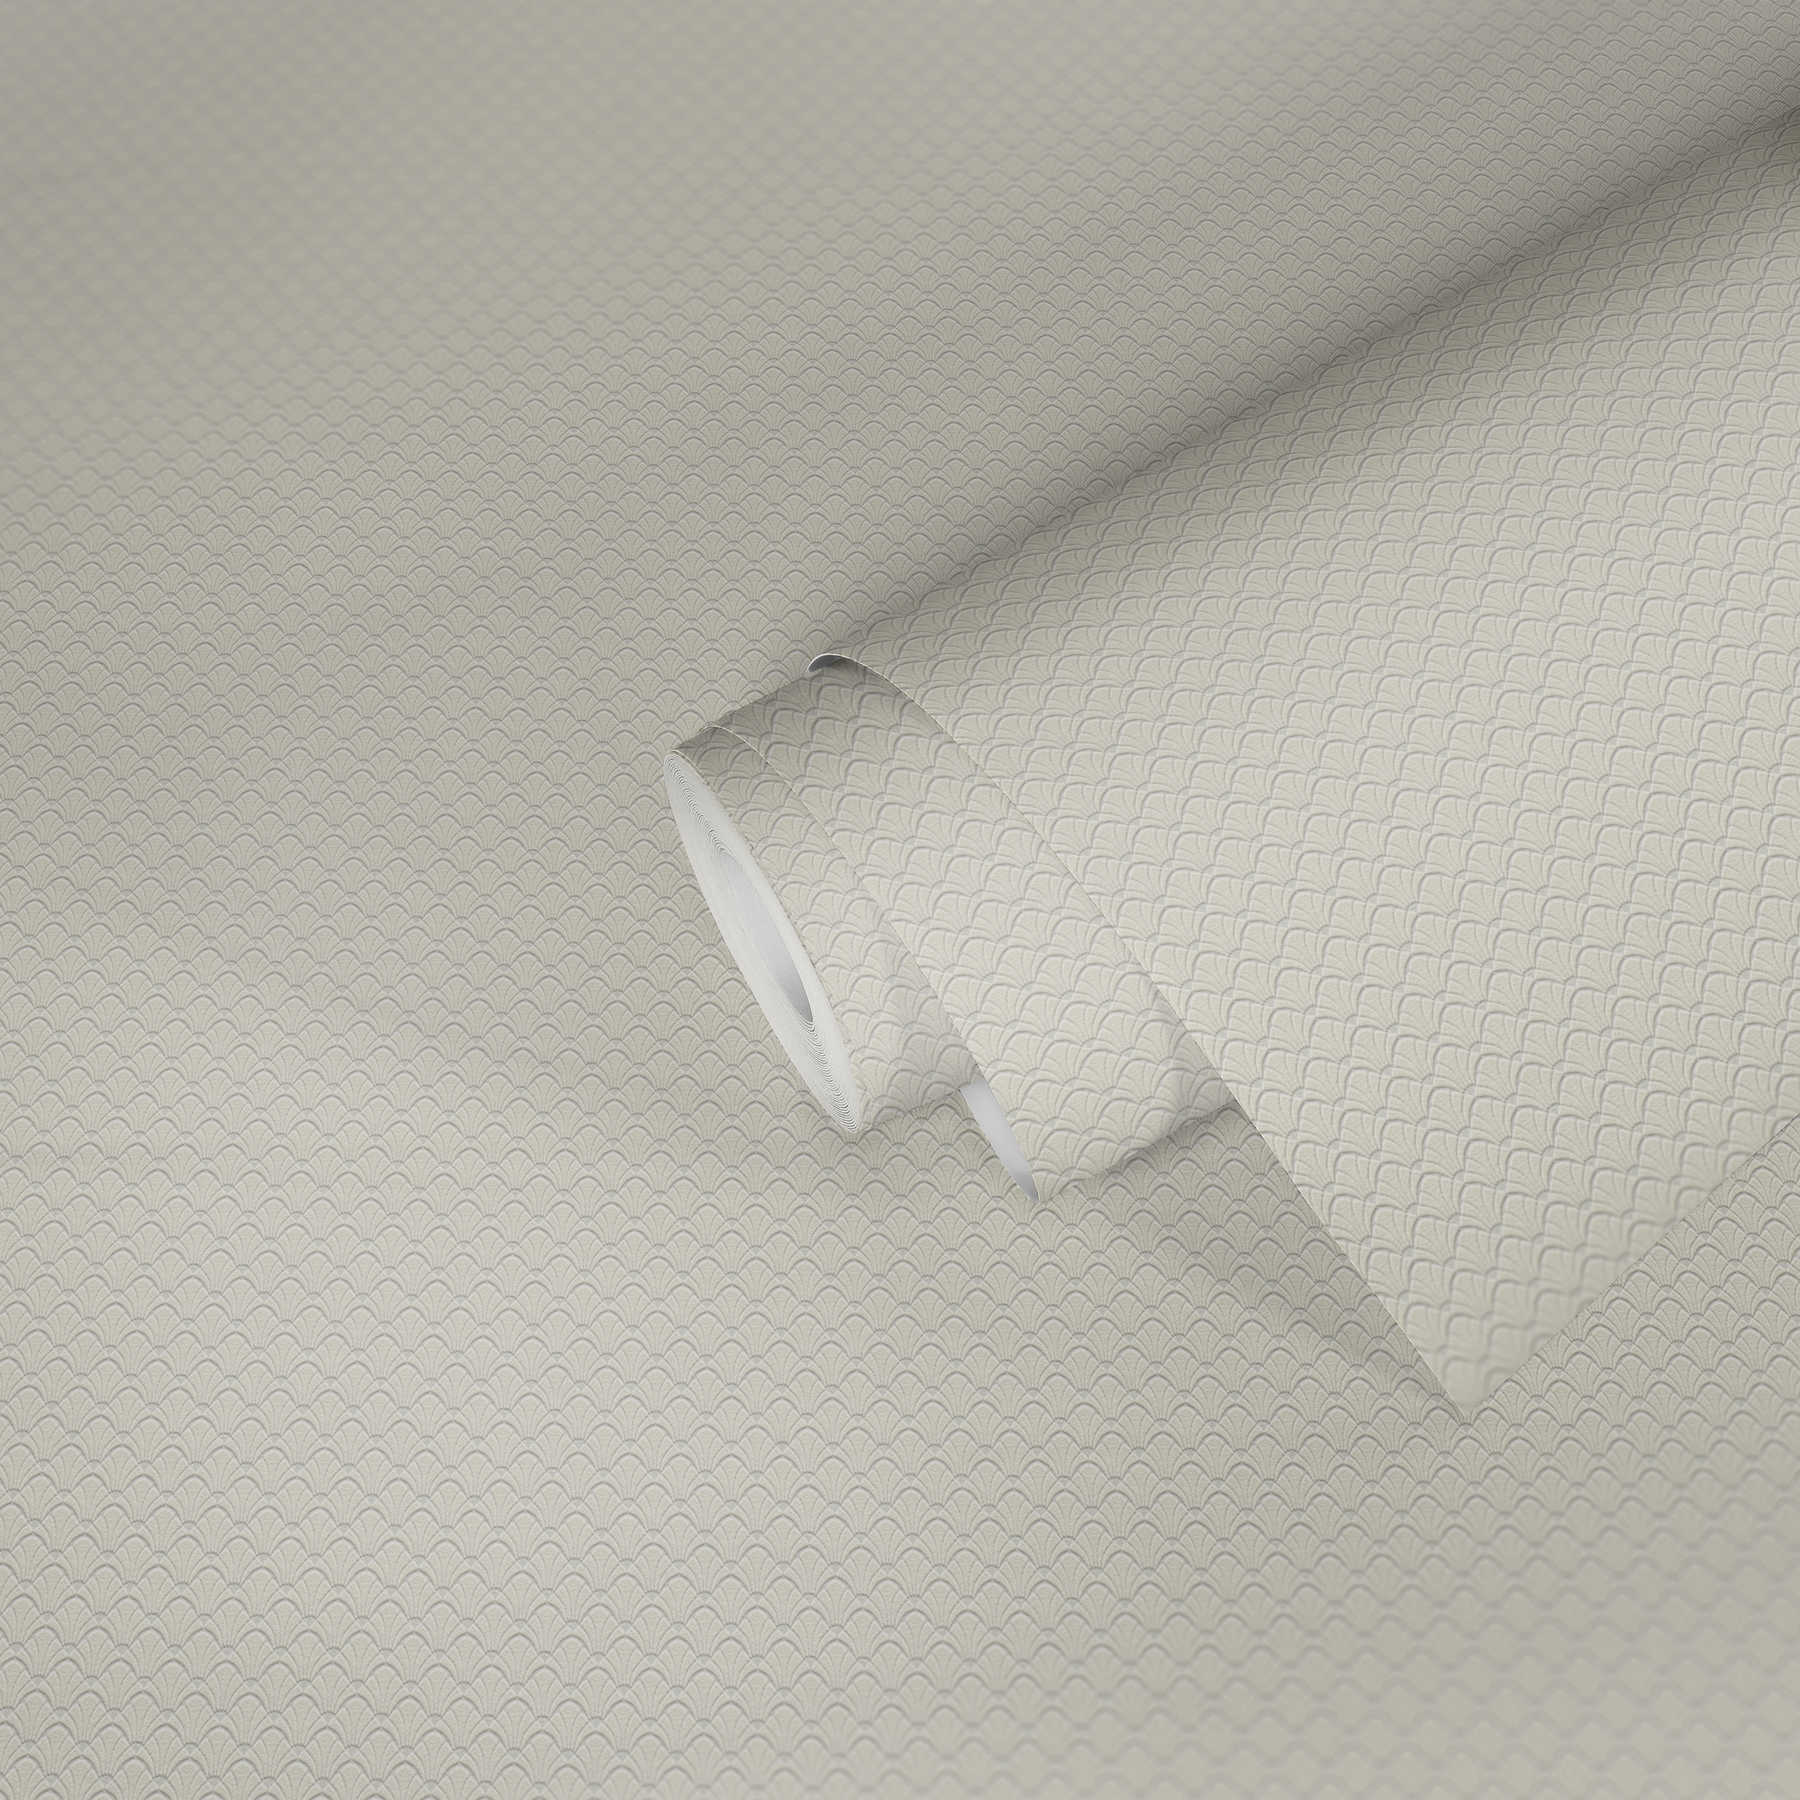             Wallpaper filigree structure pattern in shell design - cream, white
        